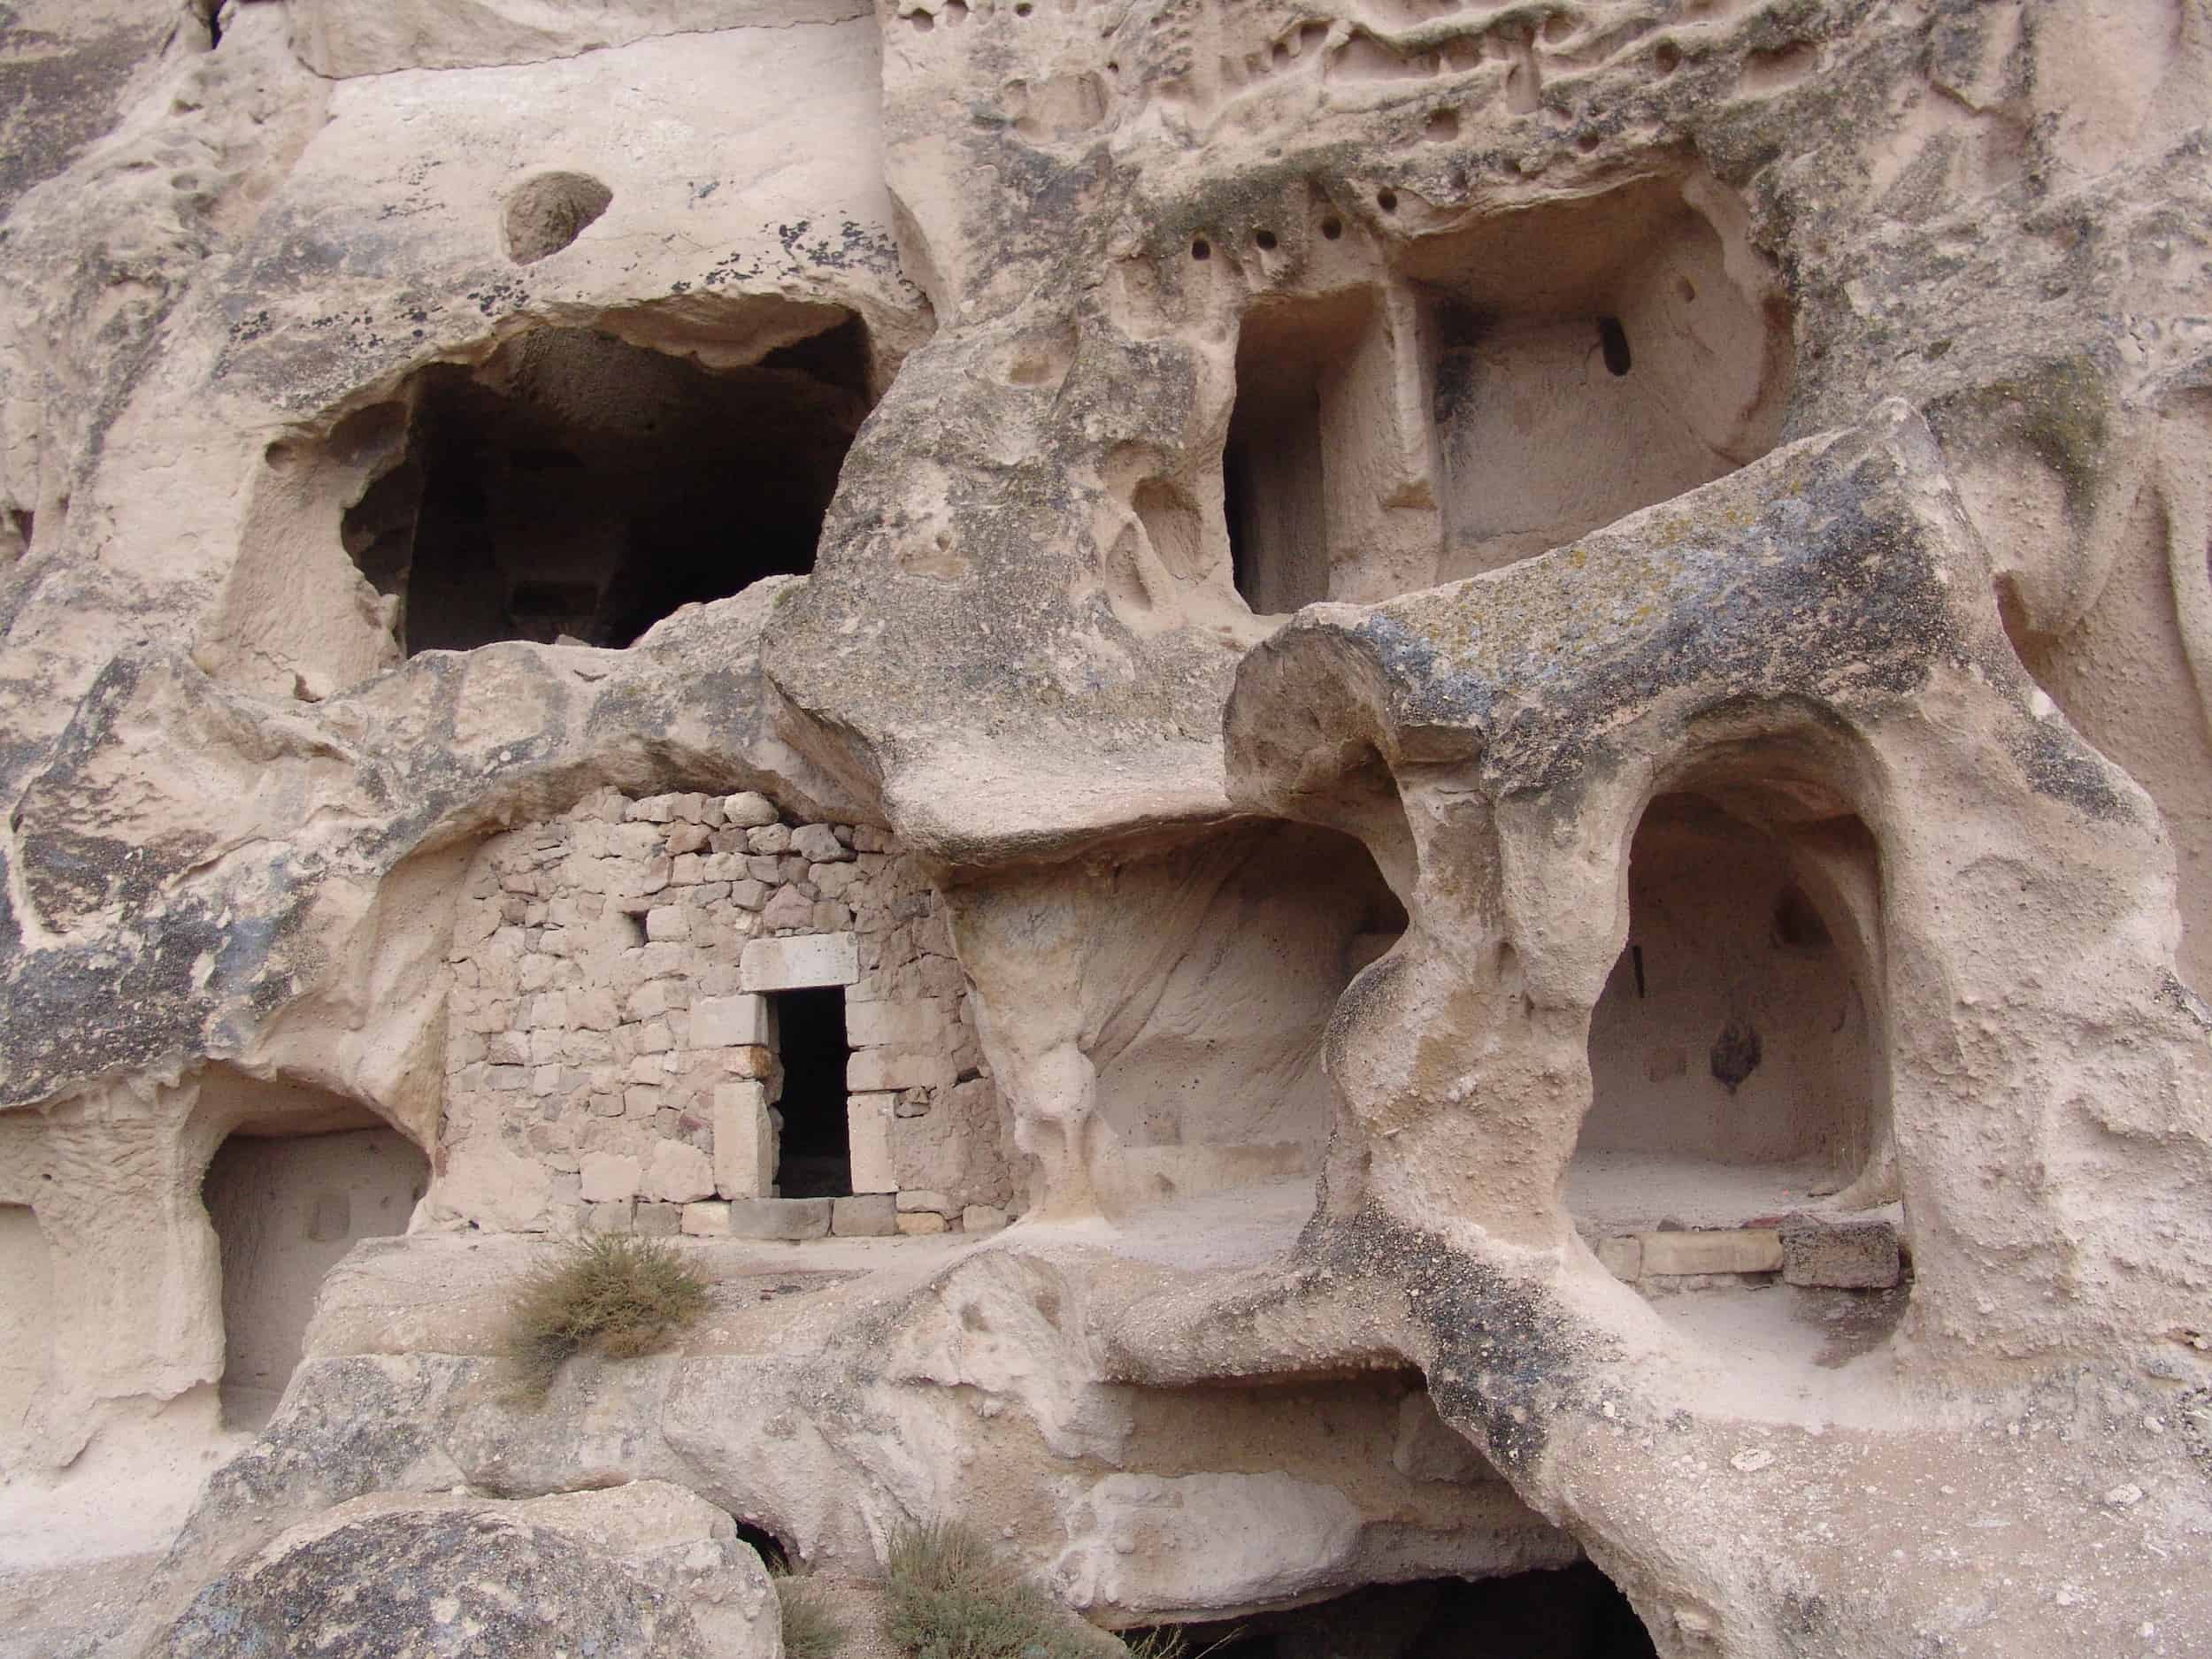 Homes cut into Üçhisar Castle in Cappadocia, Turkey